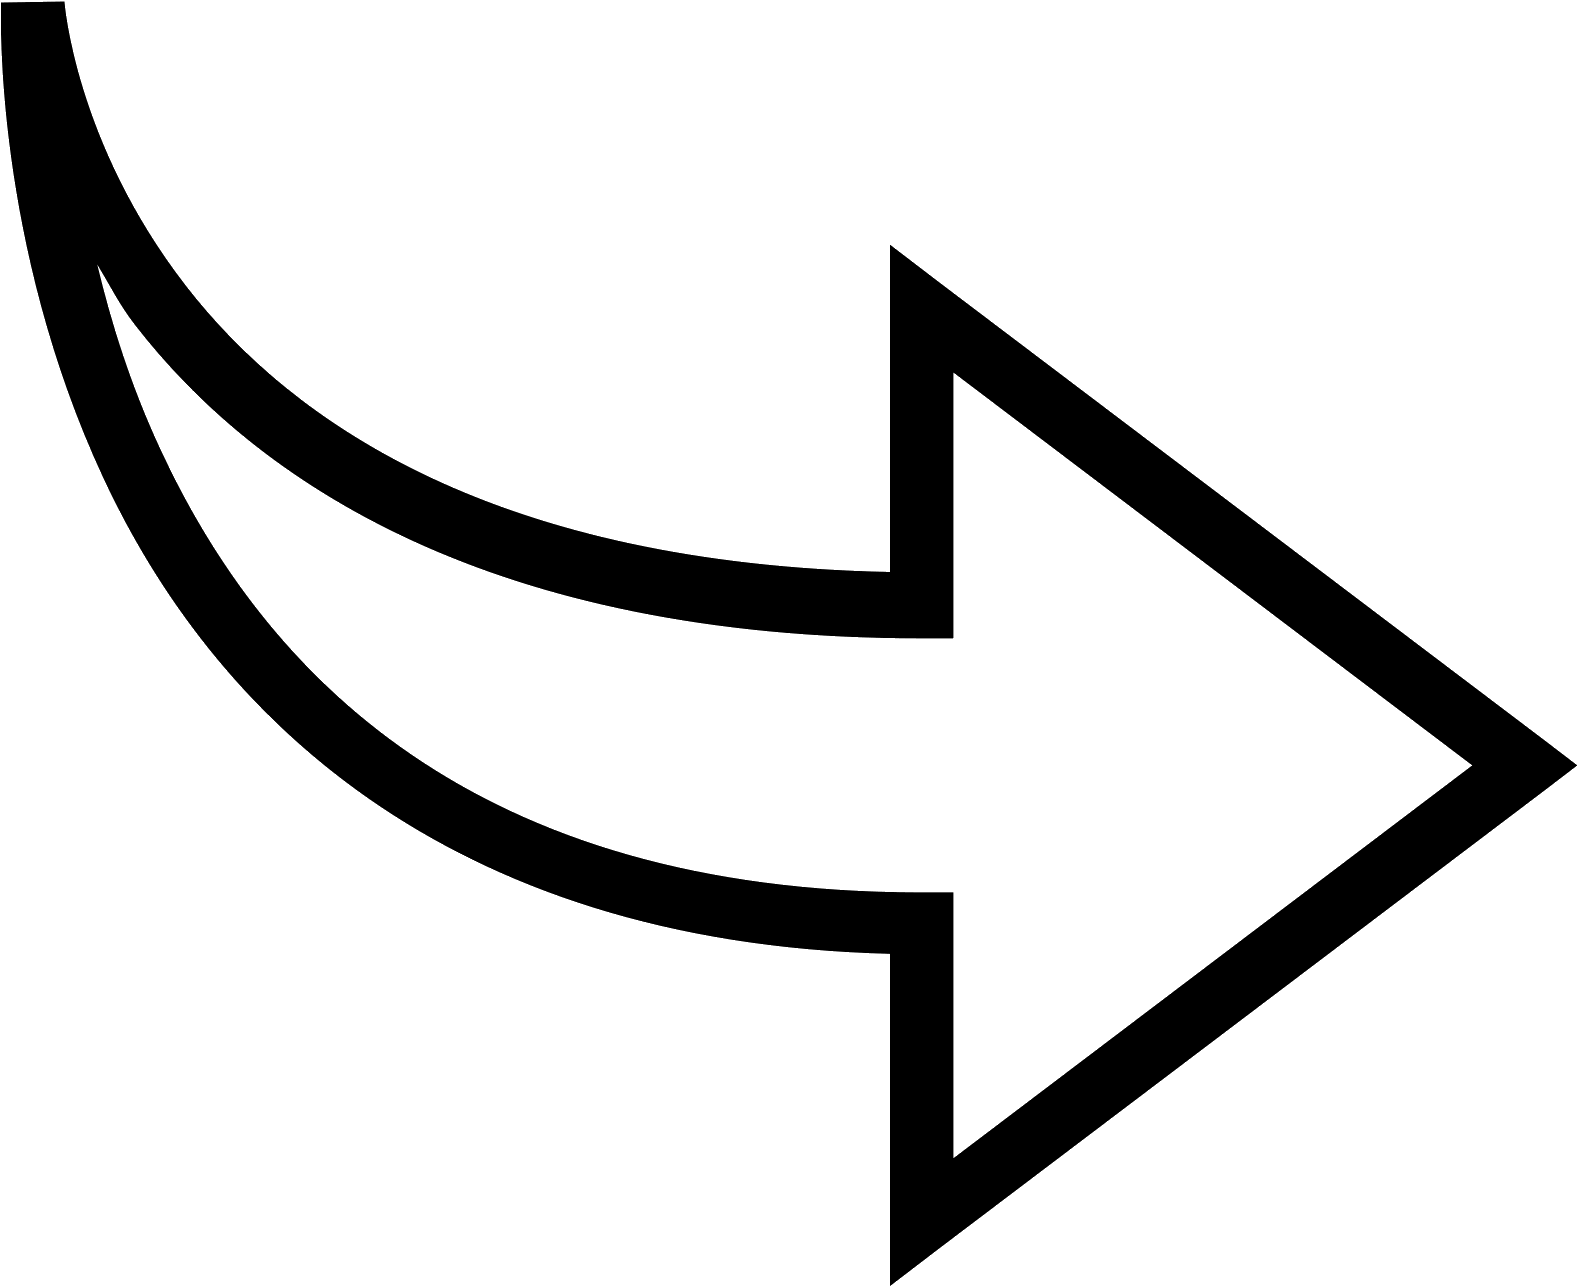 An Arrow - White Curved Arrow Png (1600x1600)